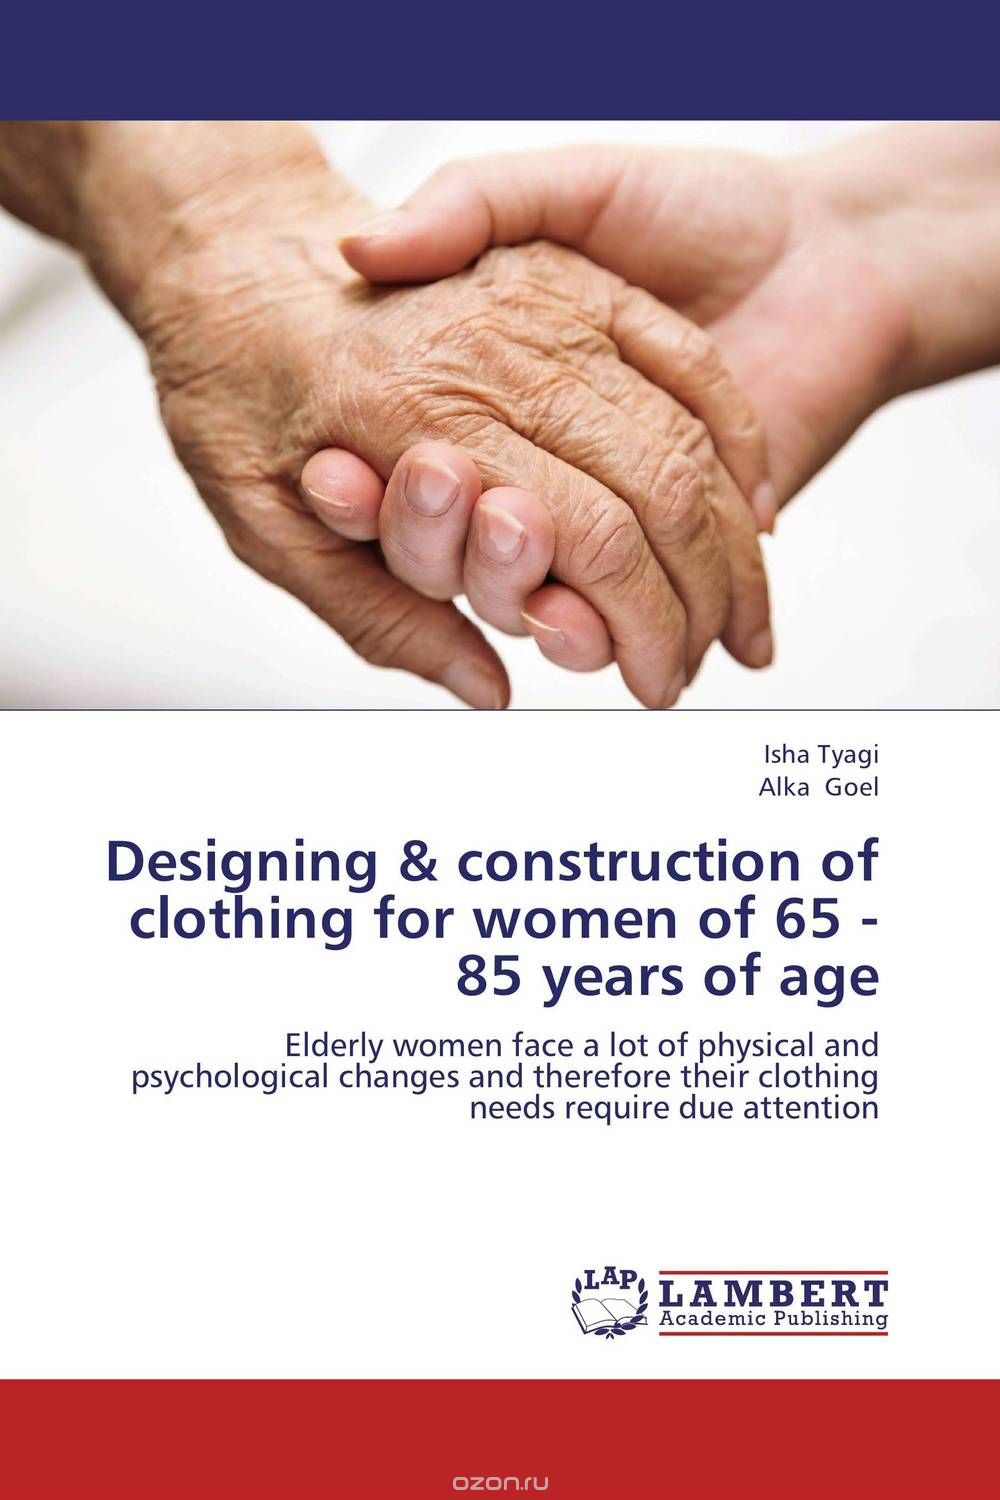 Скачать книгу "Designing & construction of clothing for women of 65 - 85 years of age"